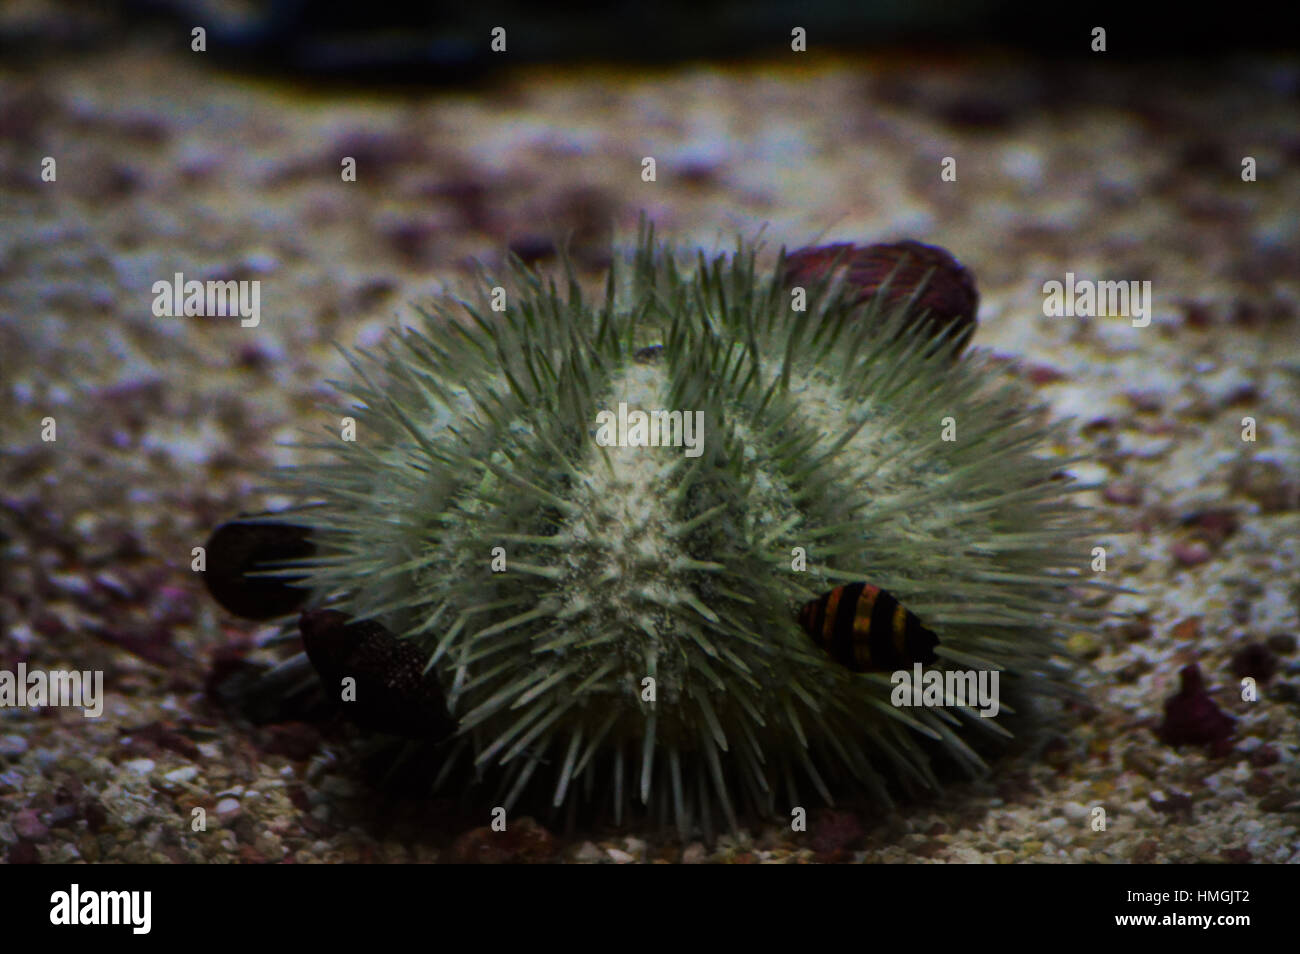 A green sea urchin in the tank Stock Photo